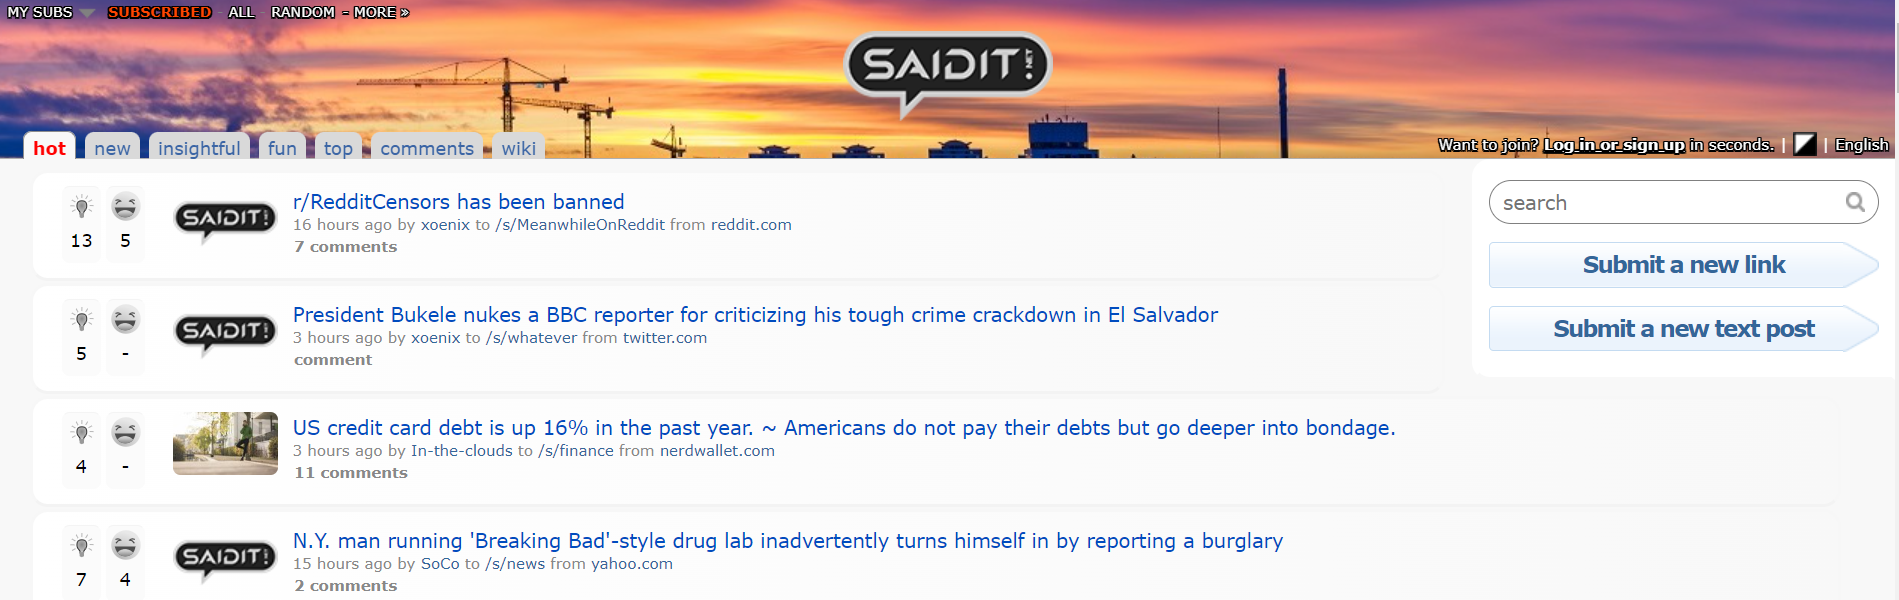 saidit.net Best Alternatives To Reddit